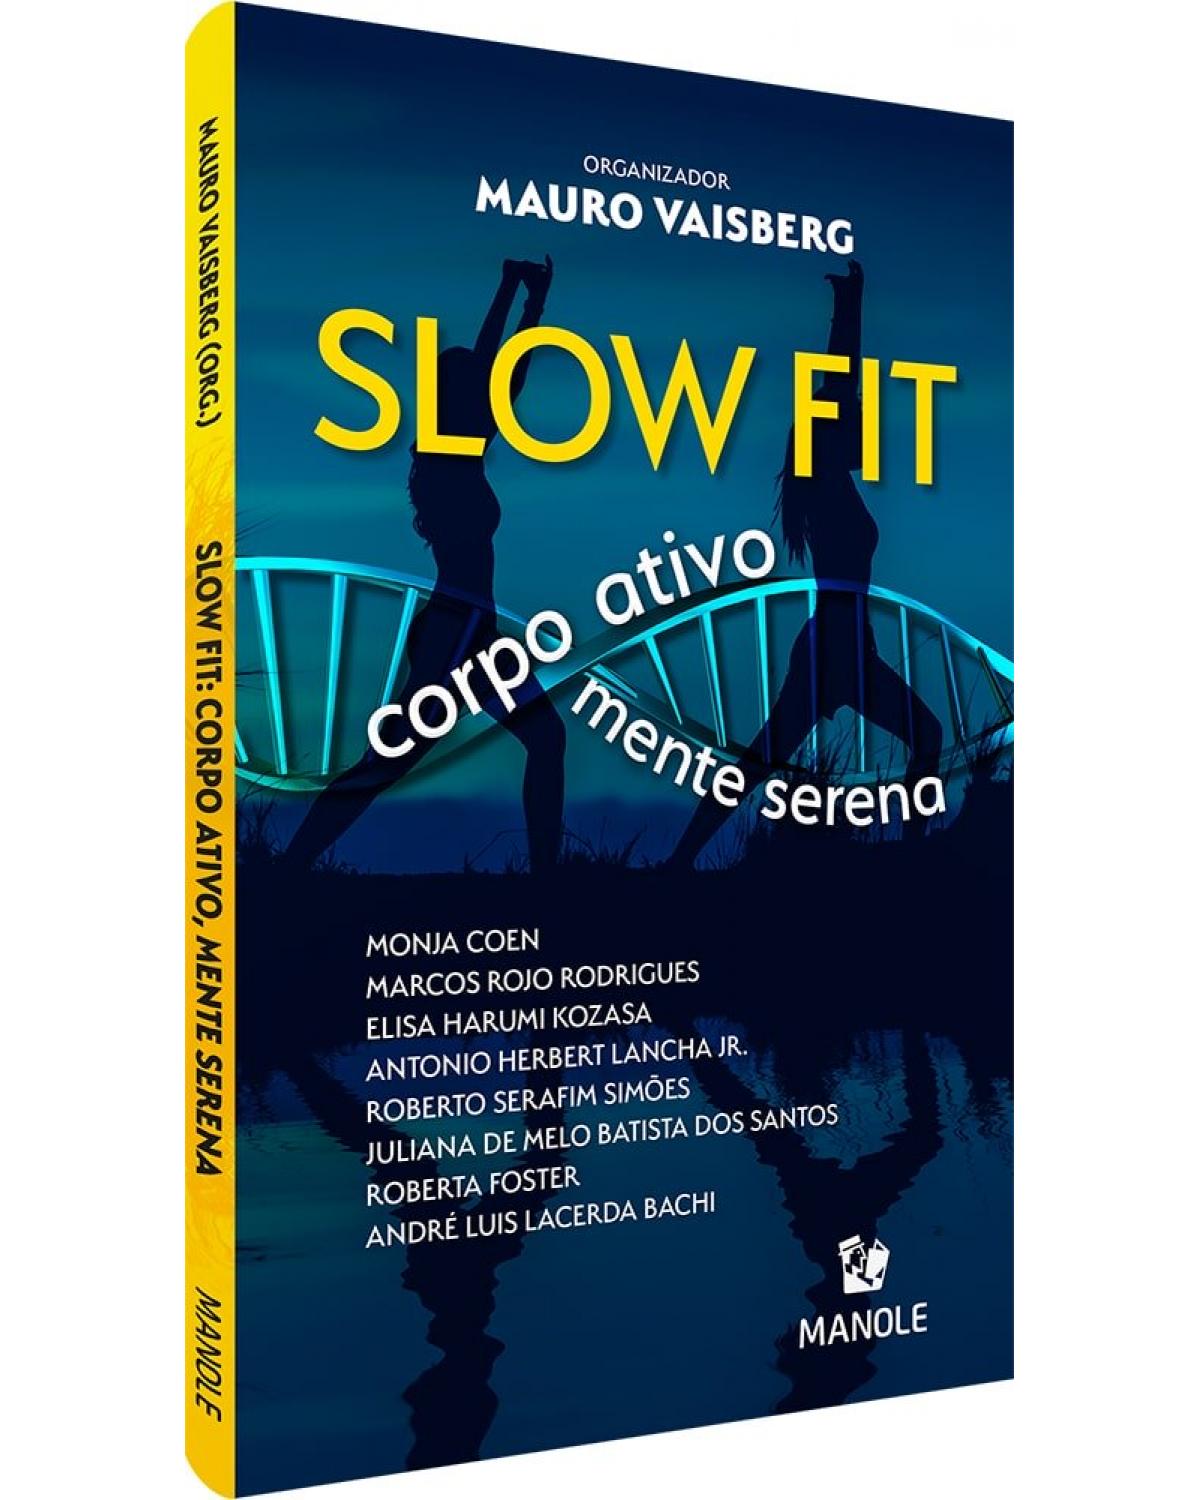 Slow fit - corpo ativo, mente serena - 1ª Edição | 2020